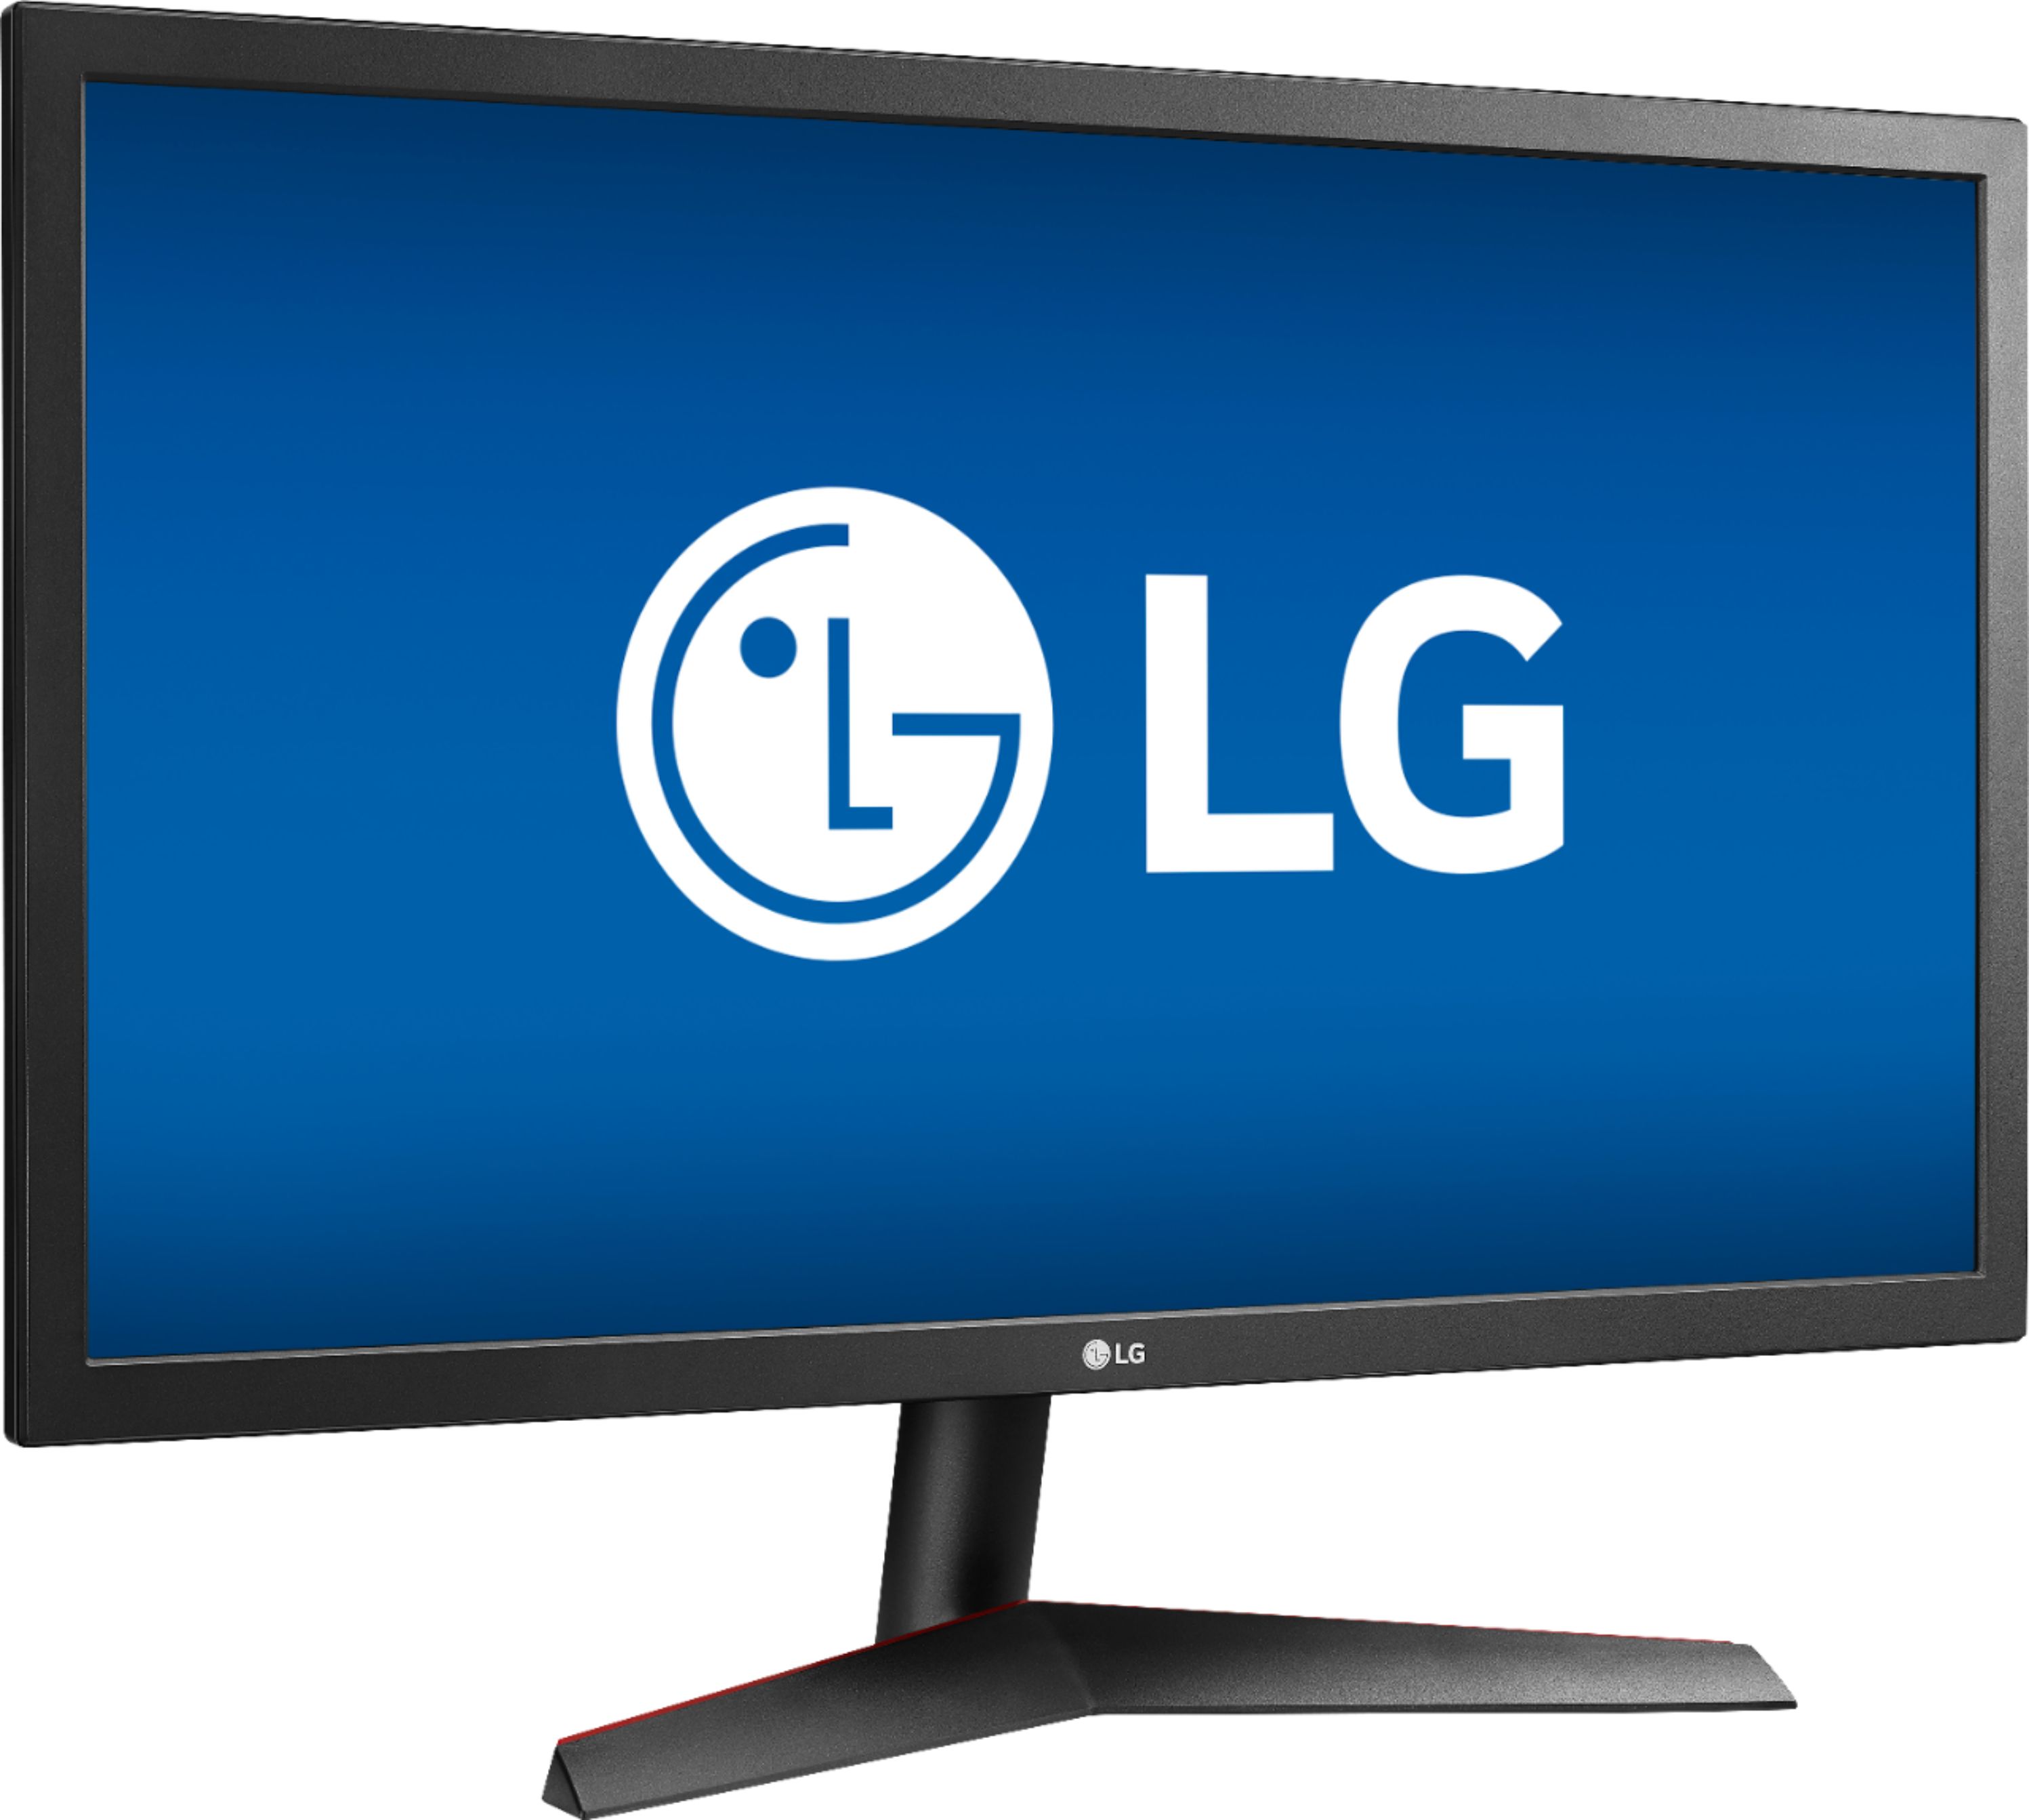 LG ULTRAGEAR GAMING SERIES 24 inch Full HD LED Backlit Gaming